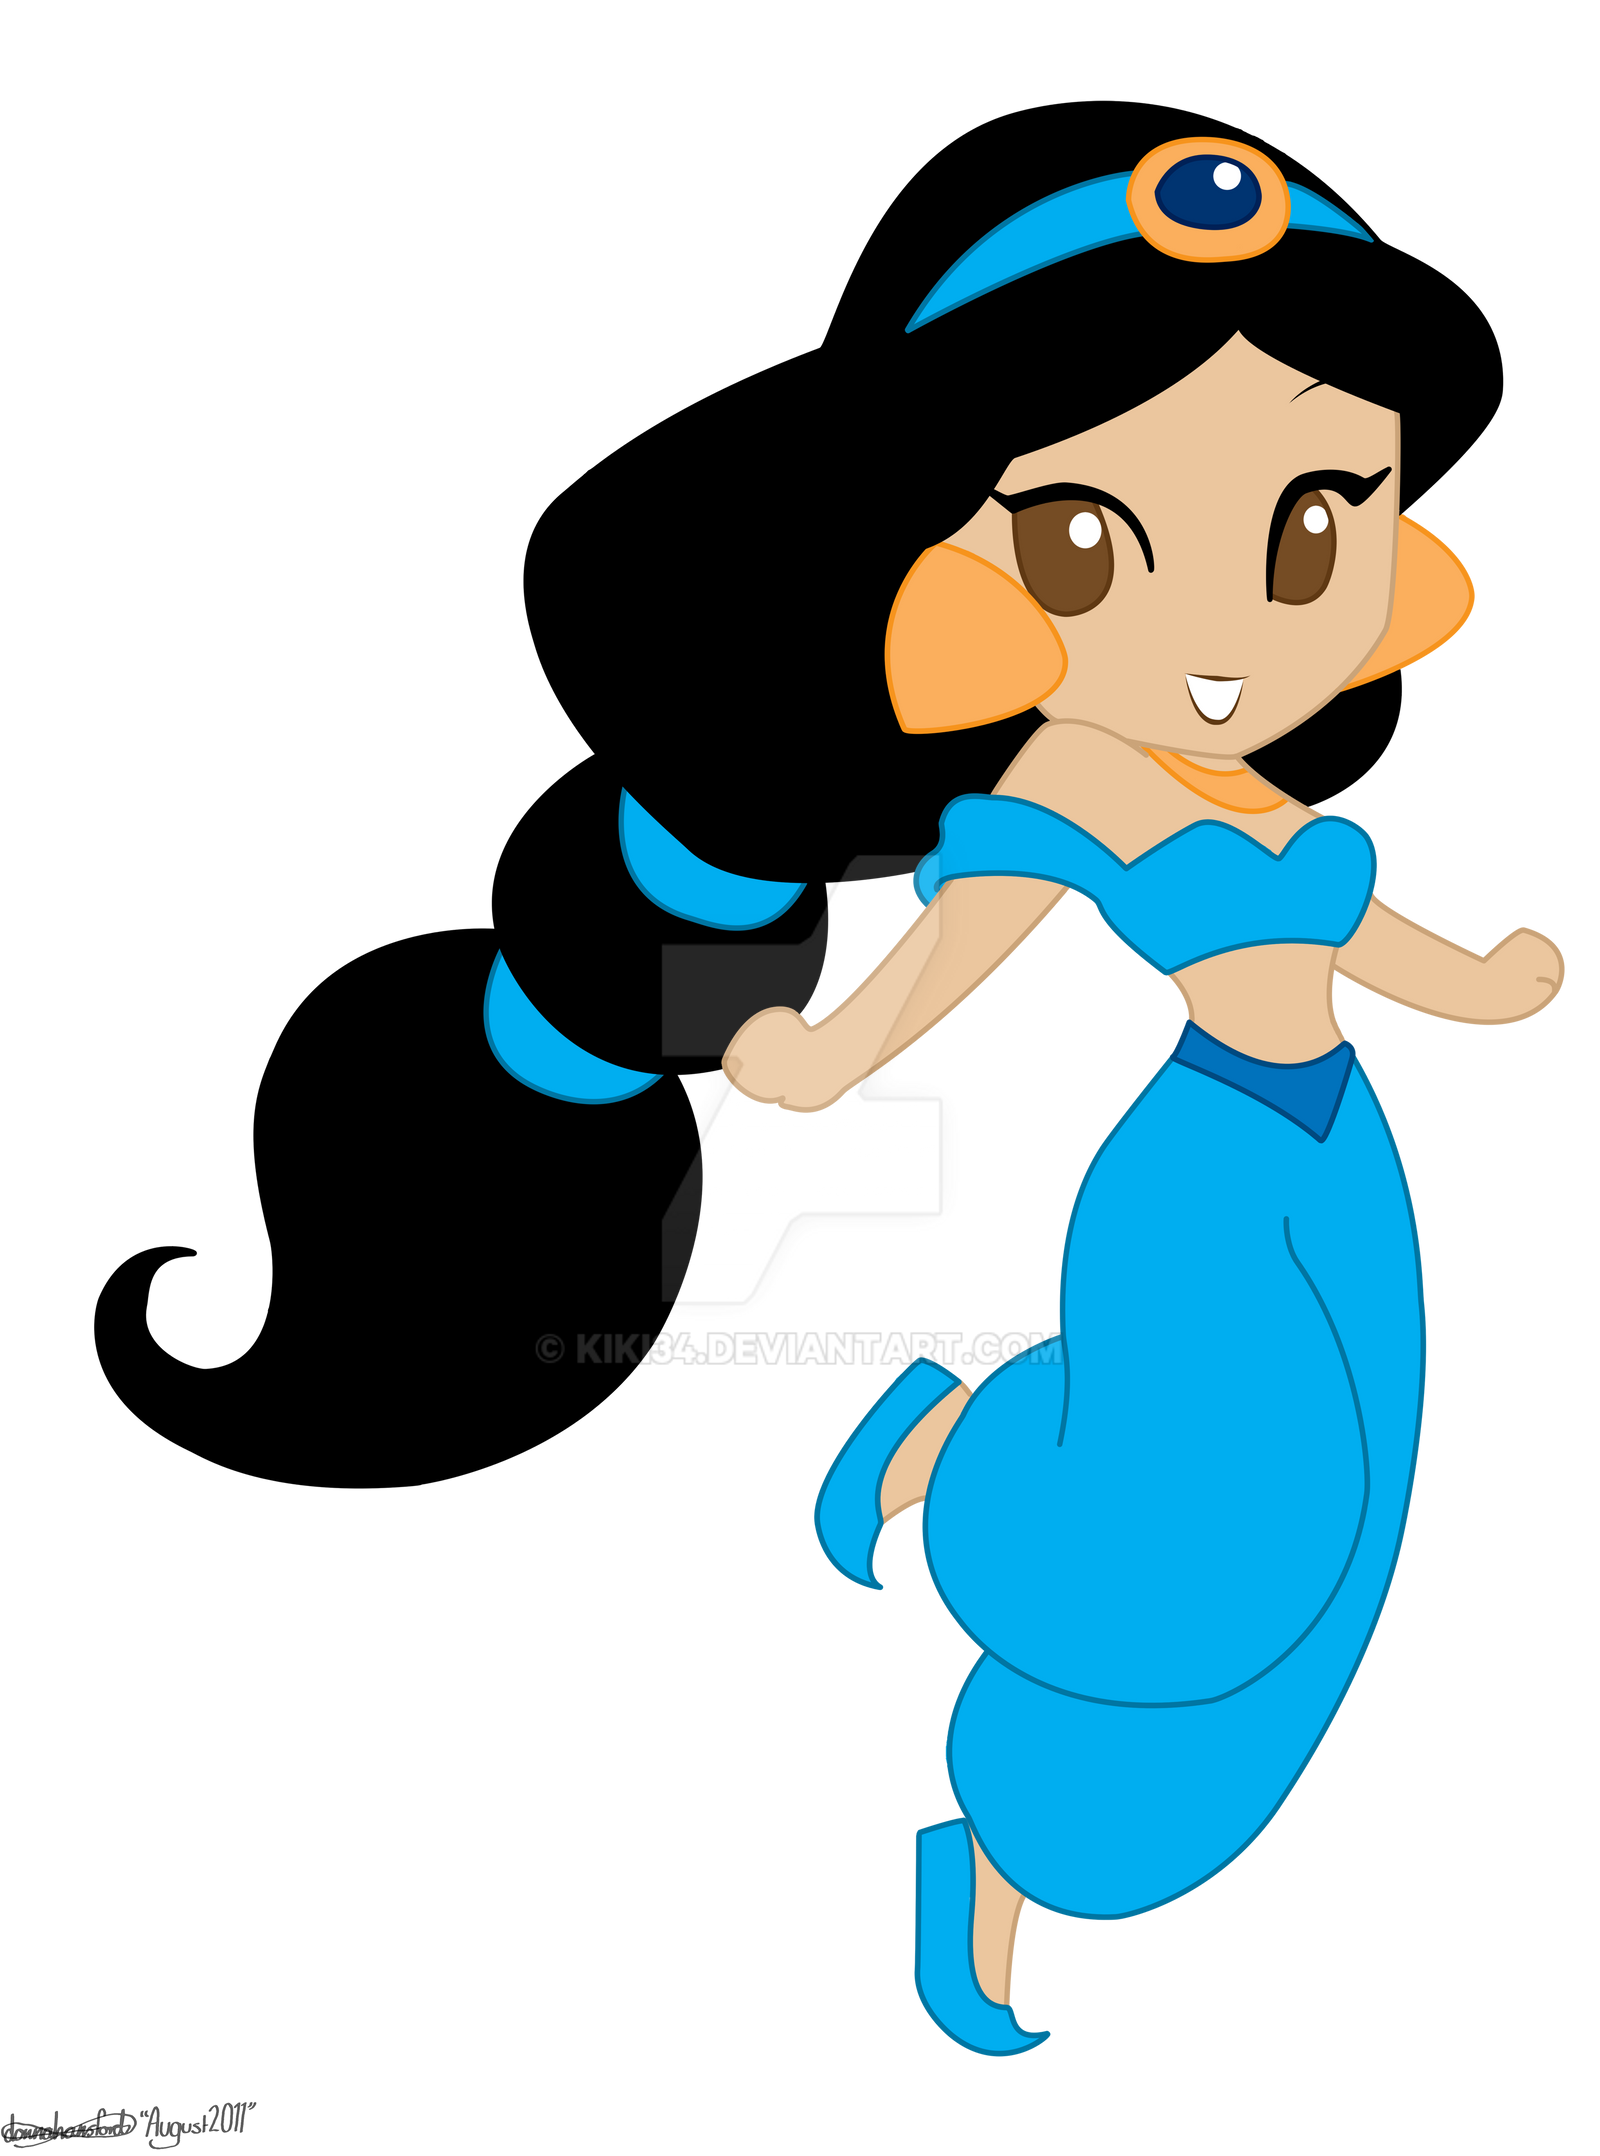 Disney Princess: Jasmine by kiki34 on DeviantArt